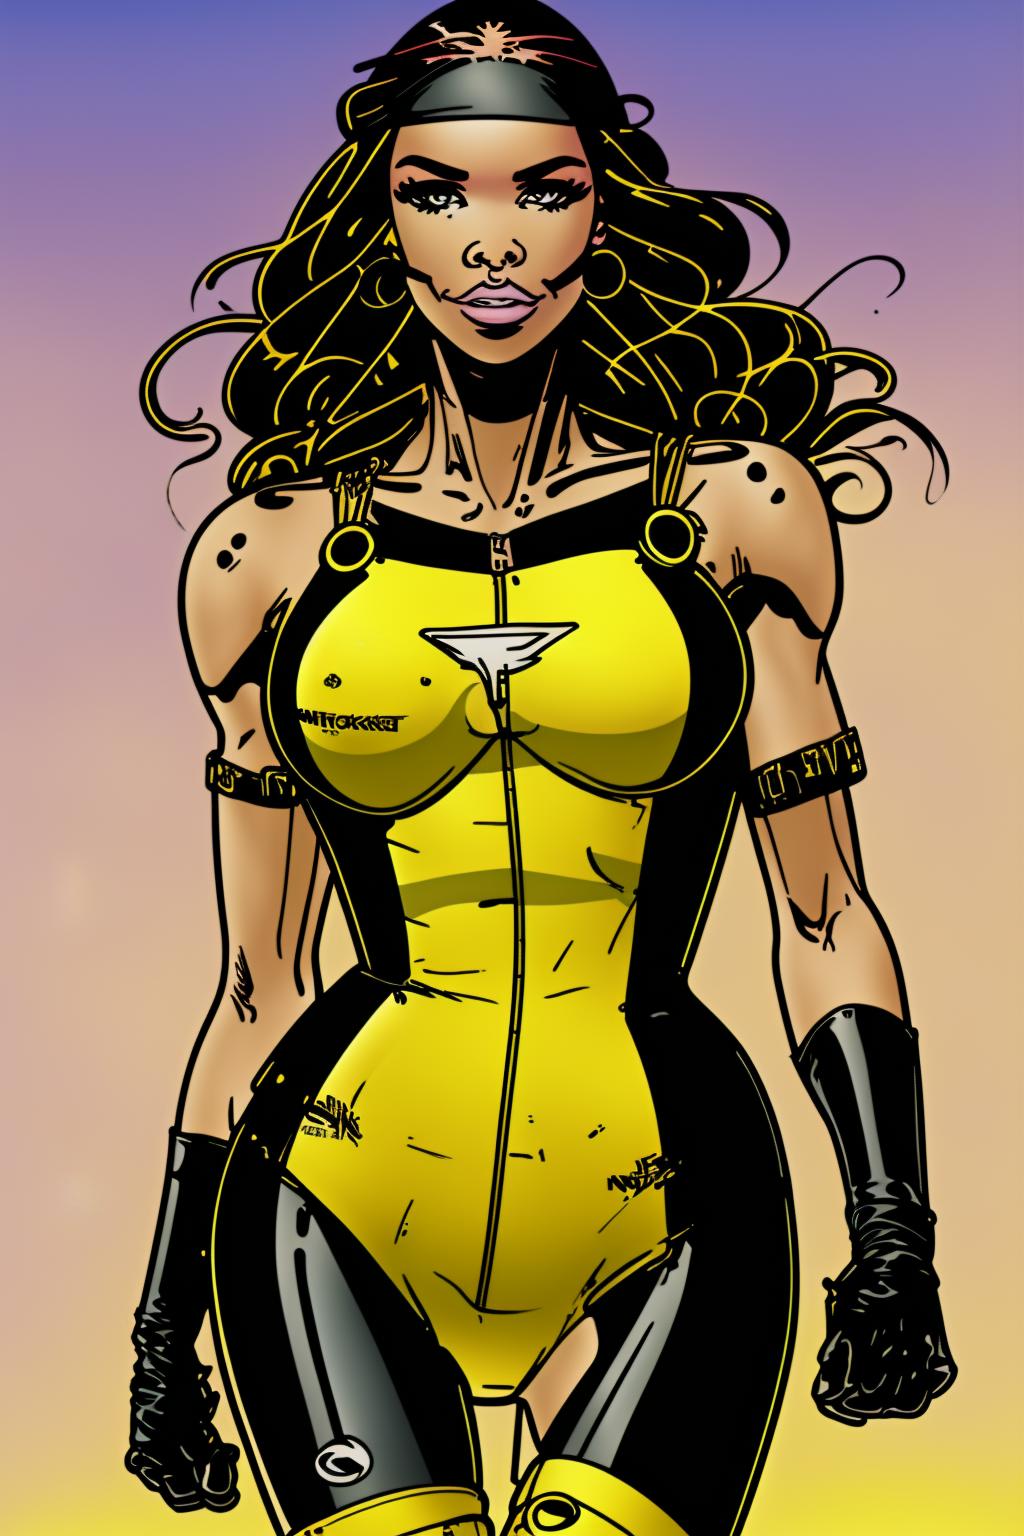 Rogue (LYCORIS) X-men of Marvel Comics image by duskfallcrew